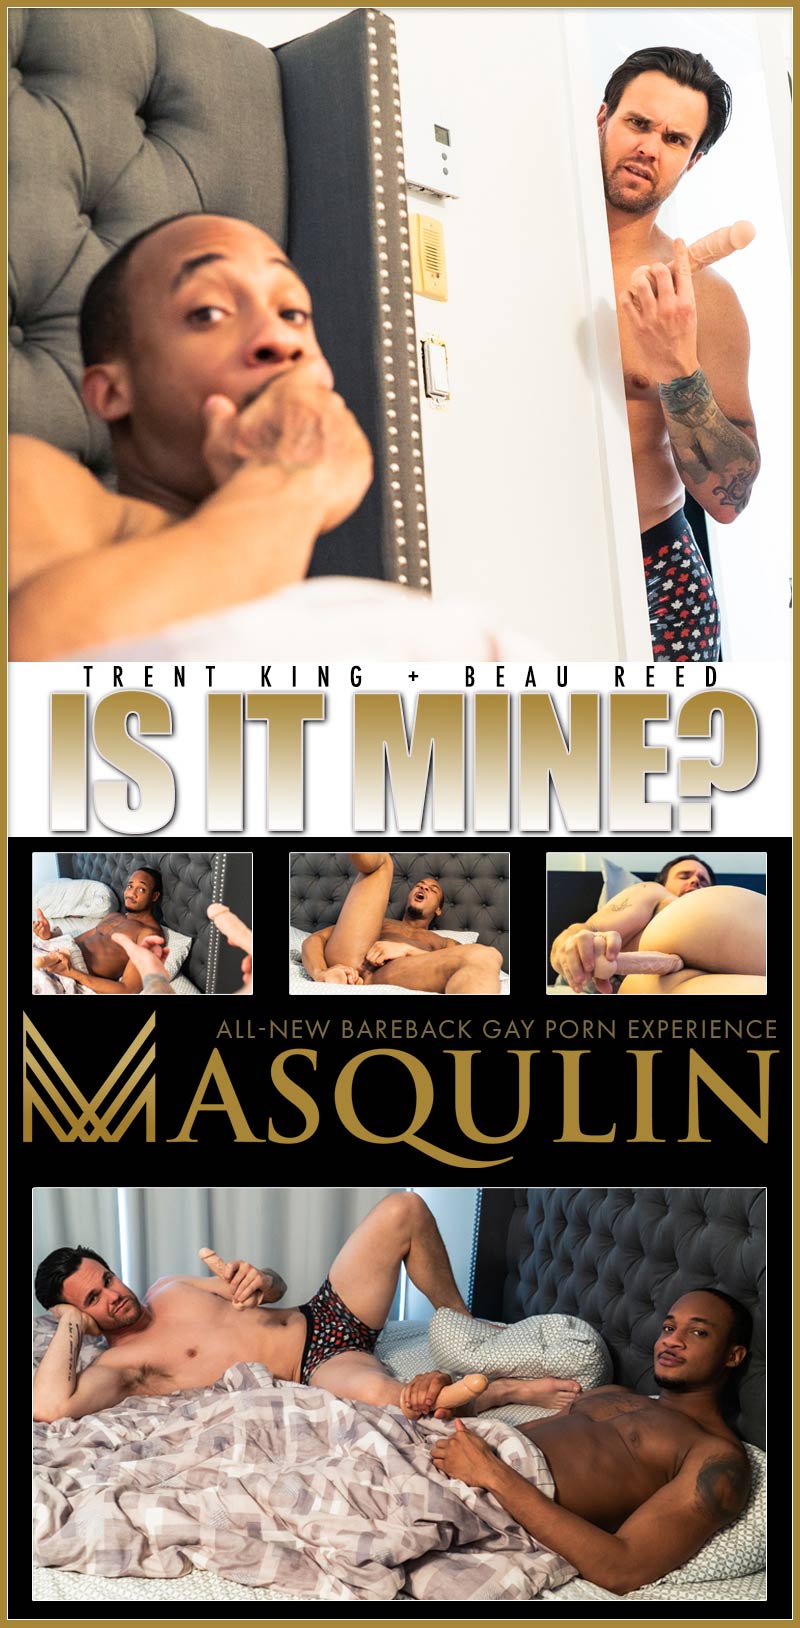 Is It Mine? (Trent King + Beau Reed) on Masqulin